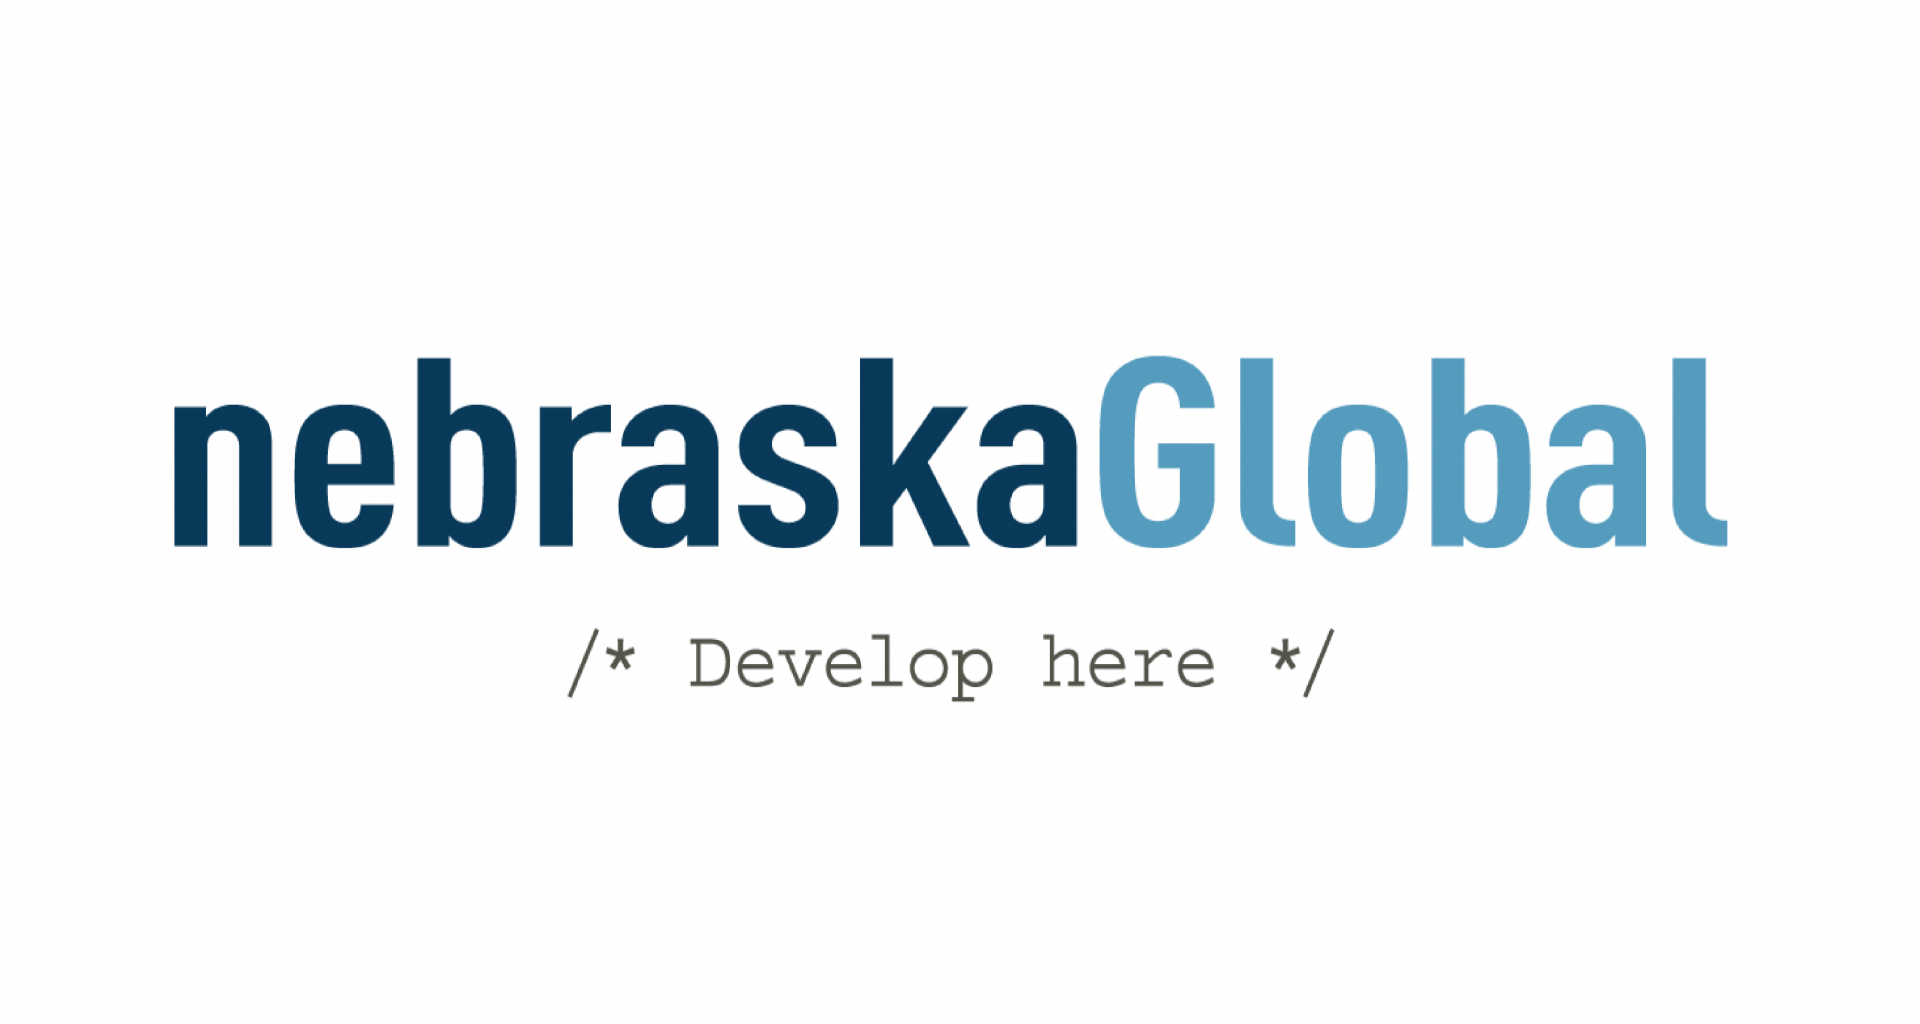 Nebraska Global logo